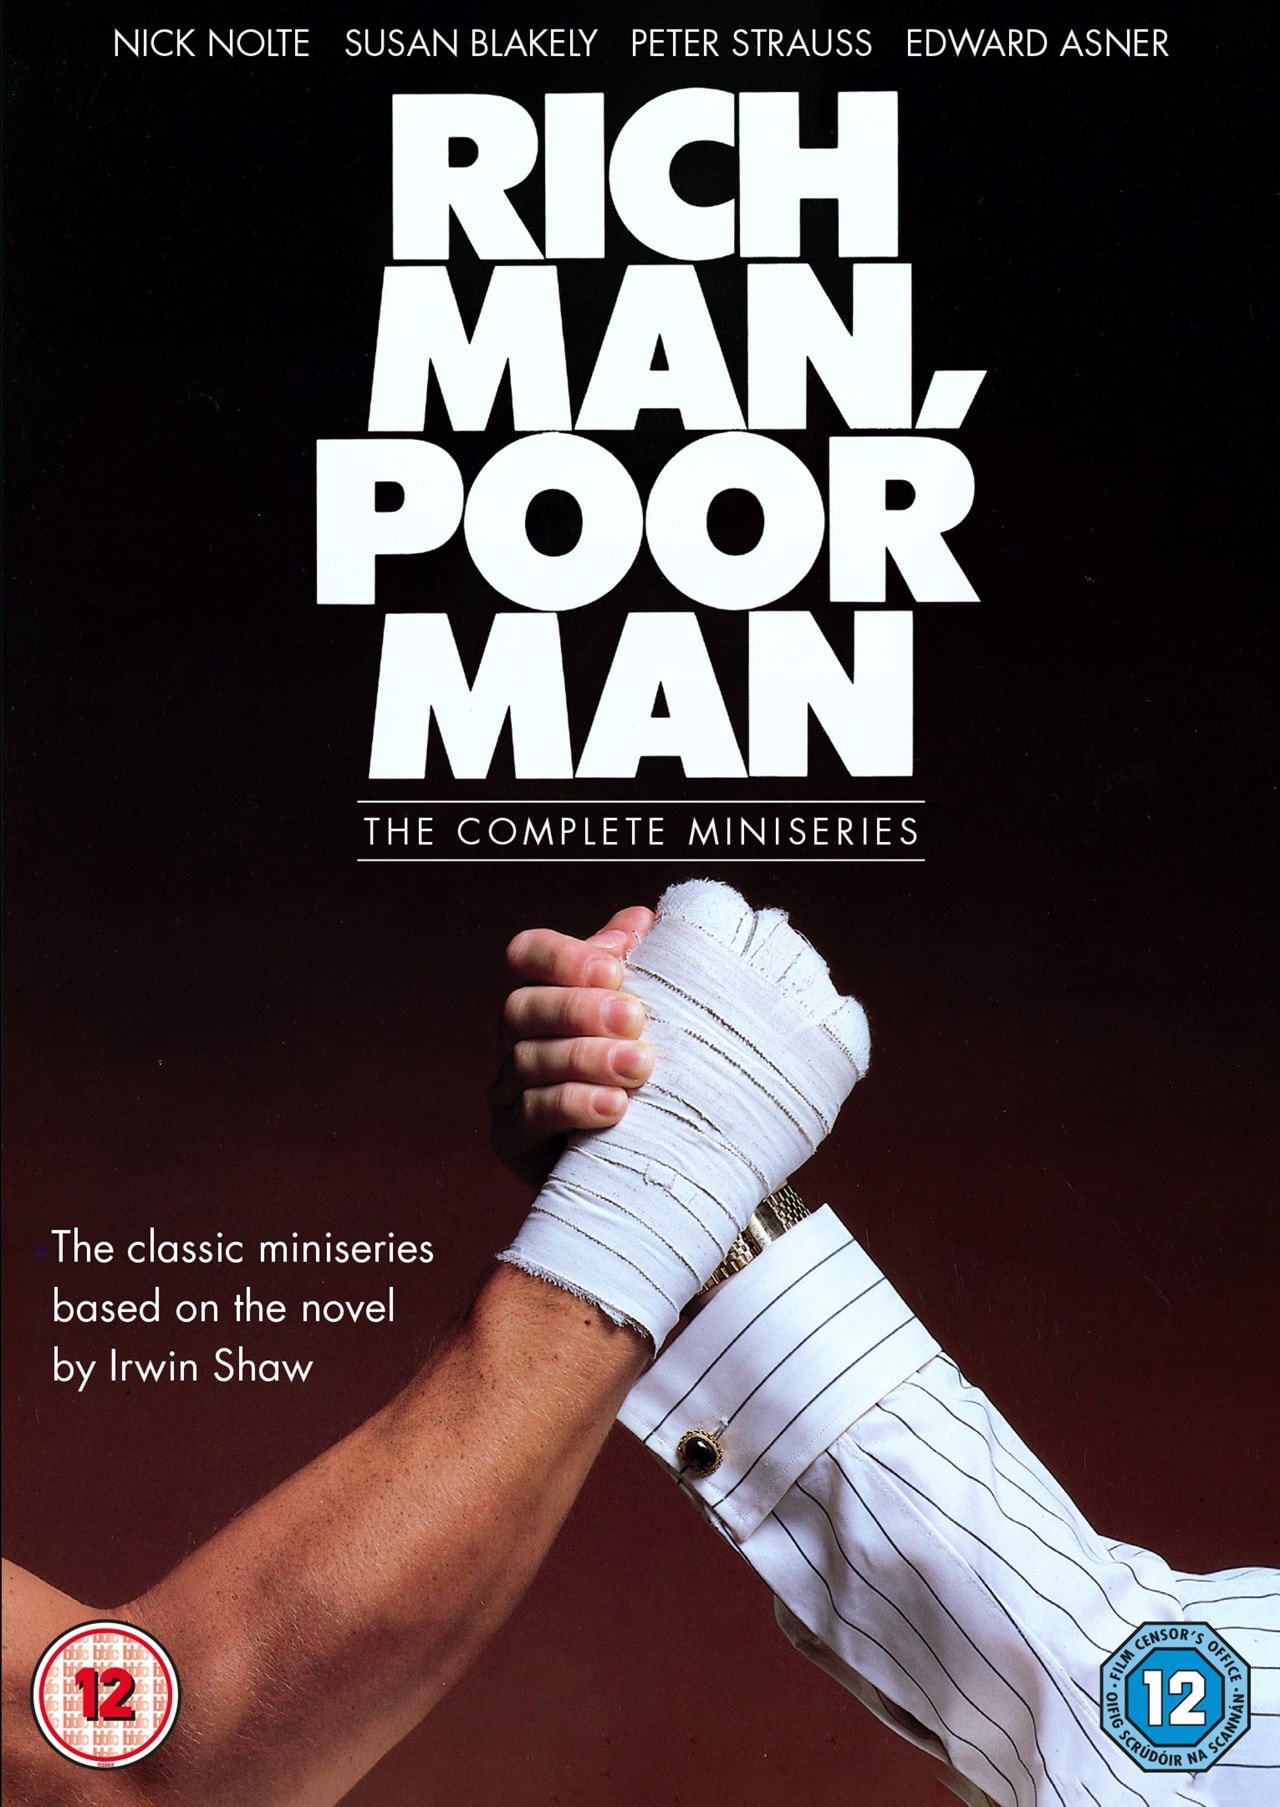 Rich Man, Poor Man | DVD Box Set | Free shipping over £20 | HMV Store